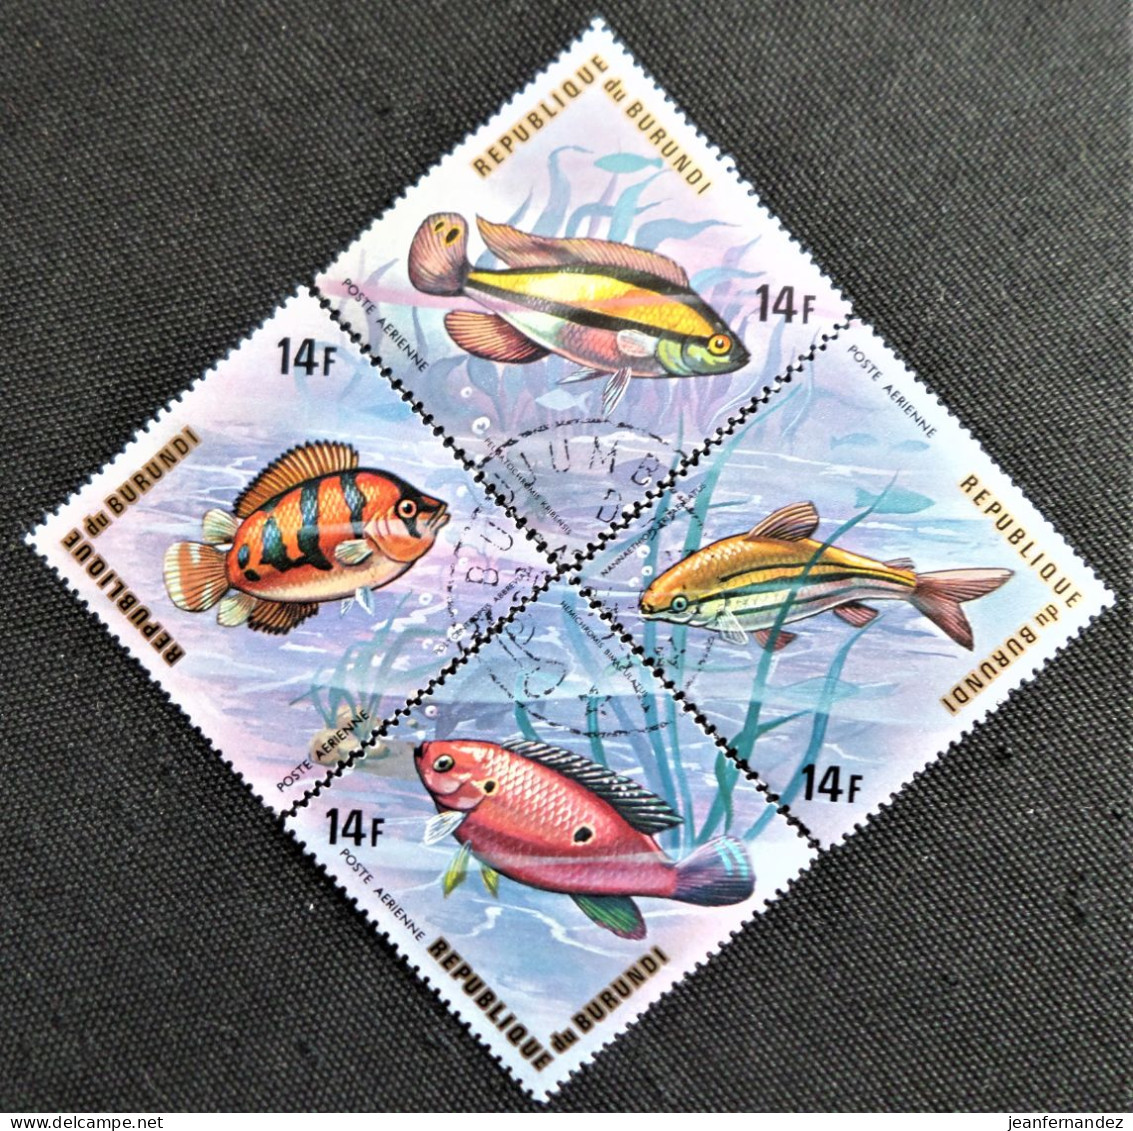 Burundi  1974 Airmail - Fish   Stampworld N° 1099 à 1102 Série Complète - Luftpost